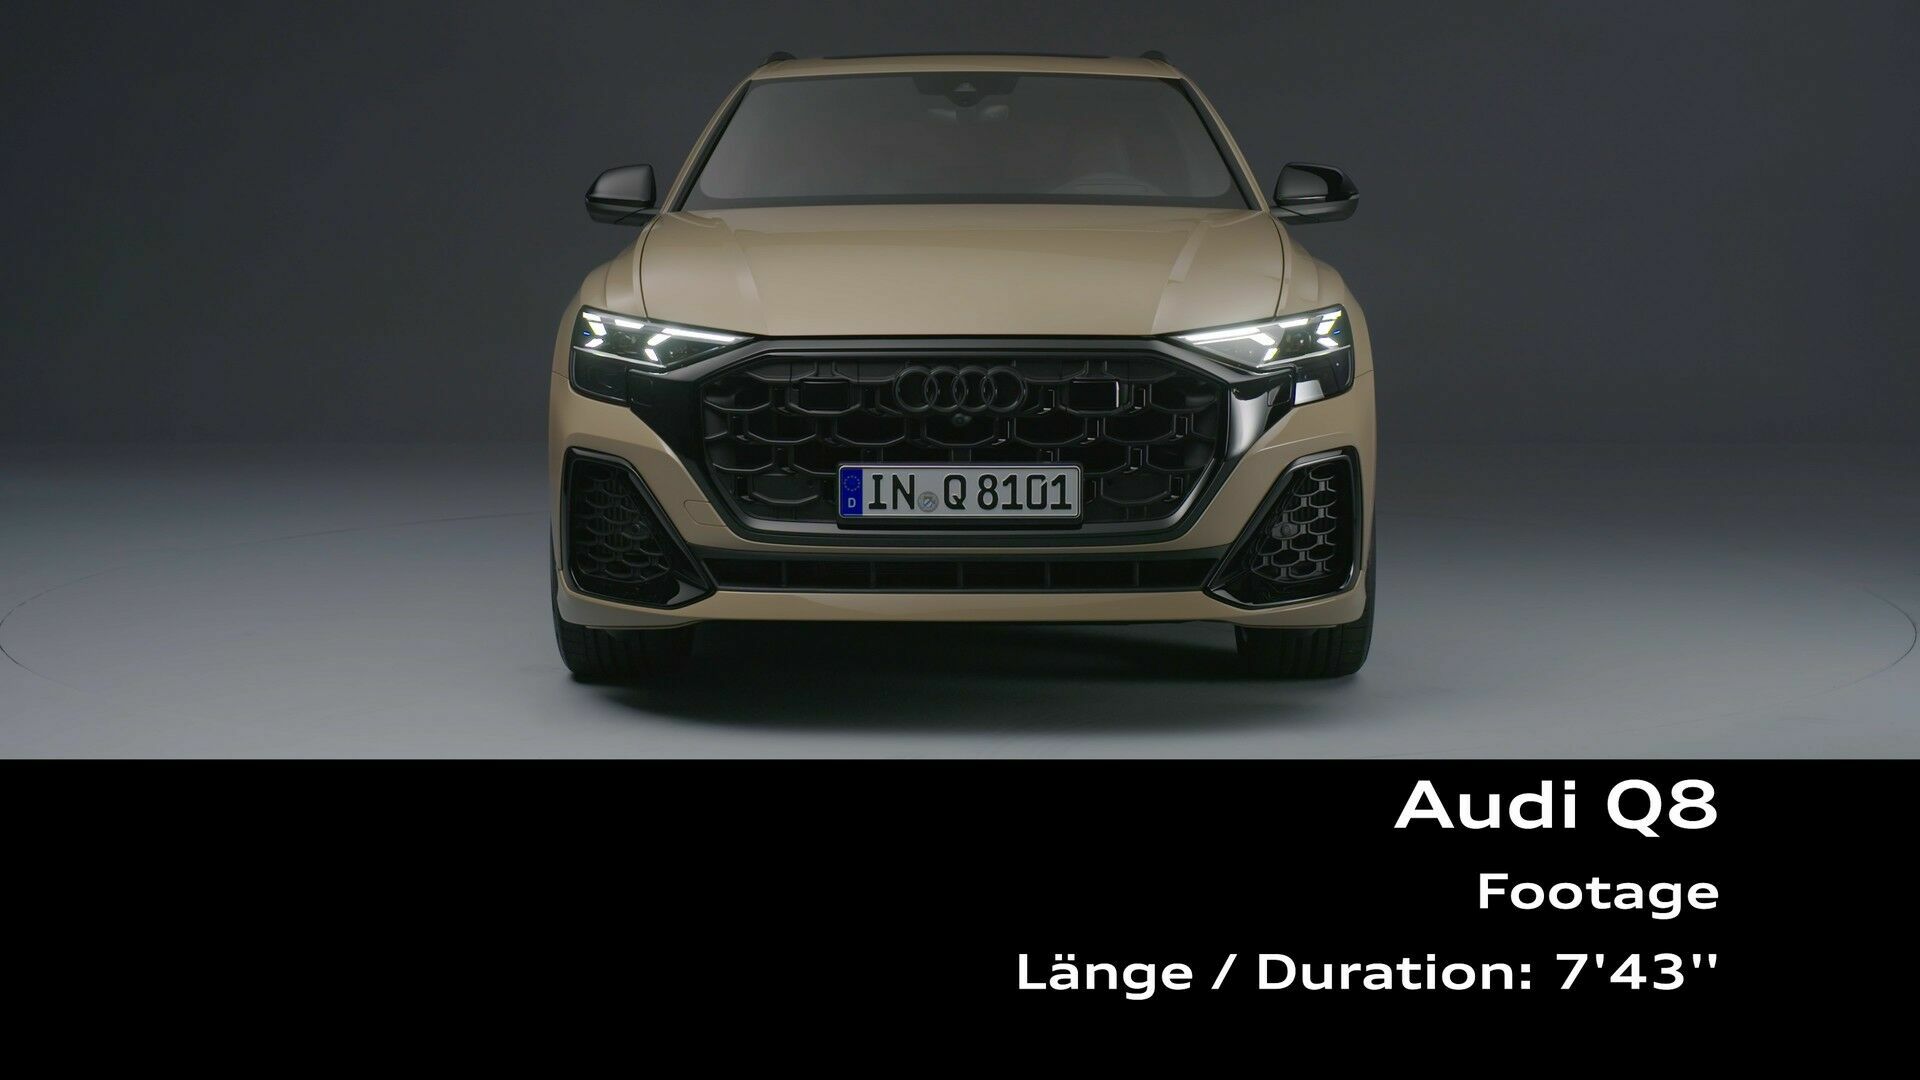 Audi Q8 – Footage (Studio)